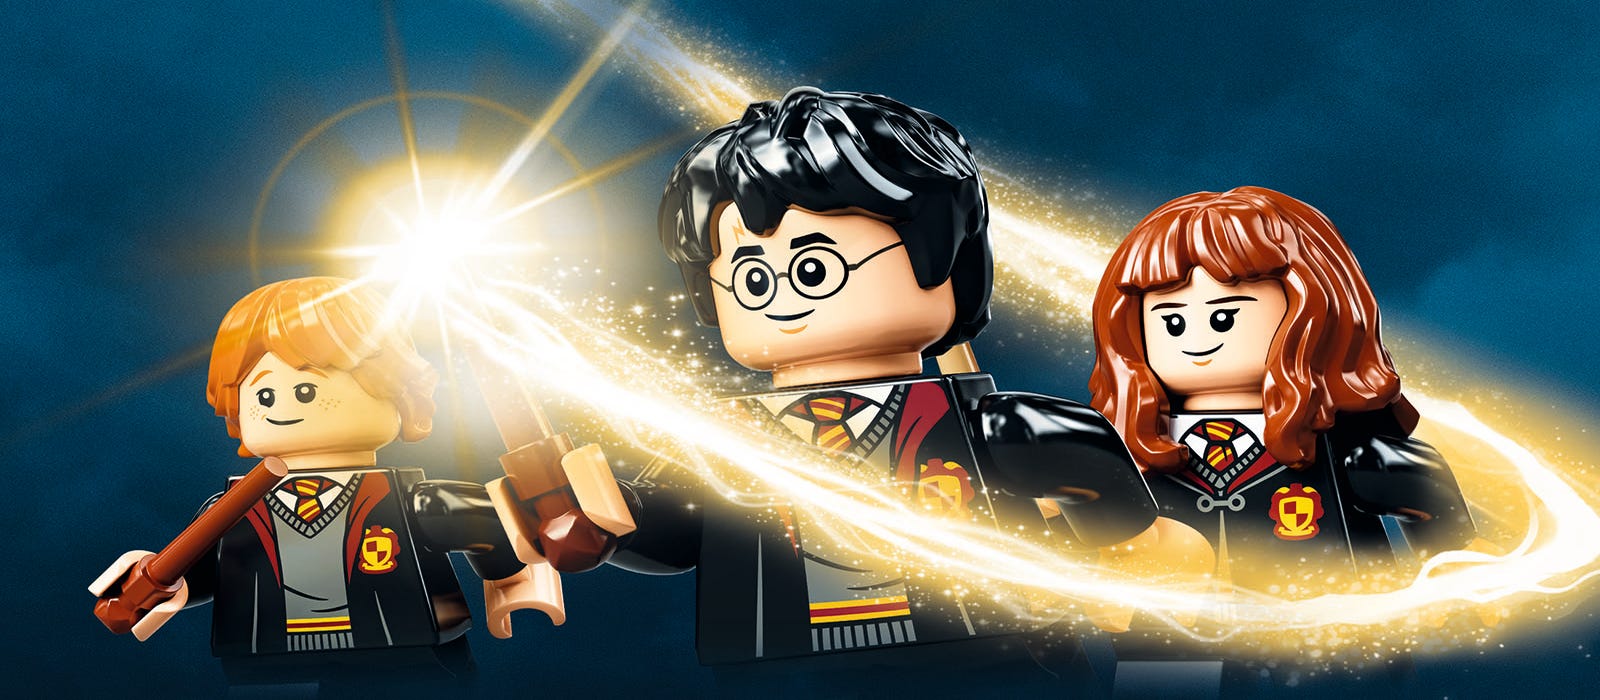 Harry Potter' LEGO sets — Harry Potter Fan Zone